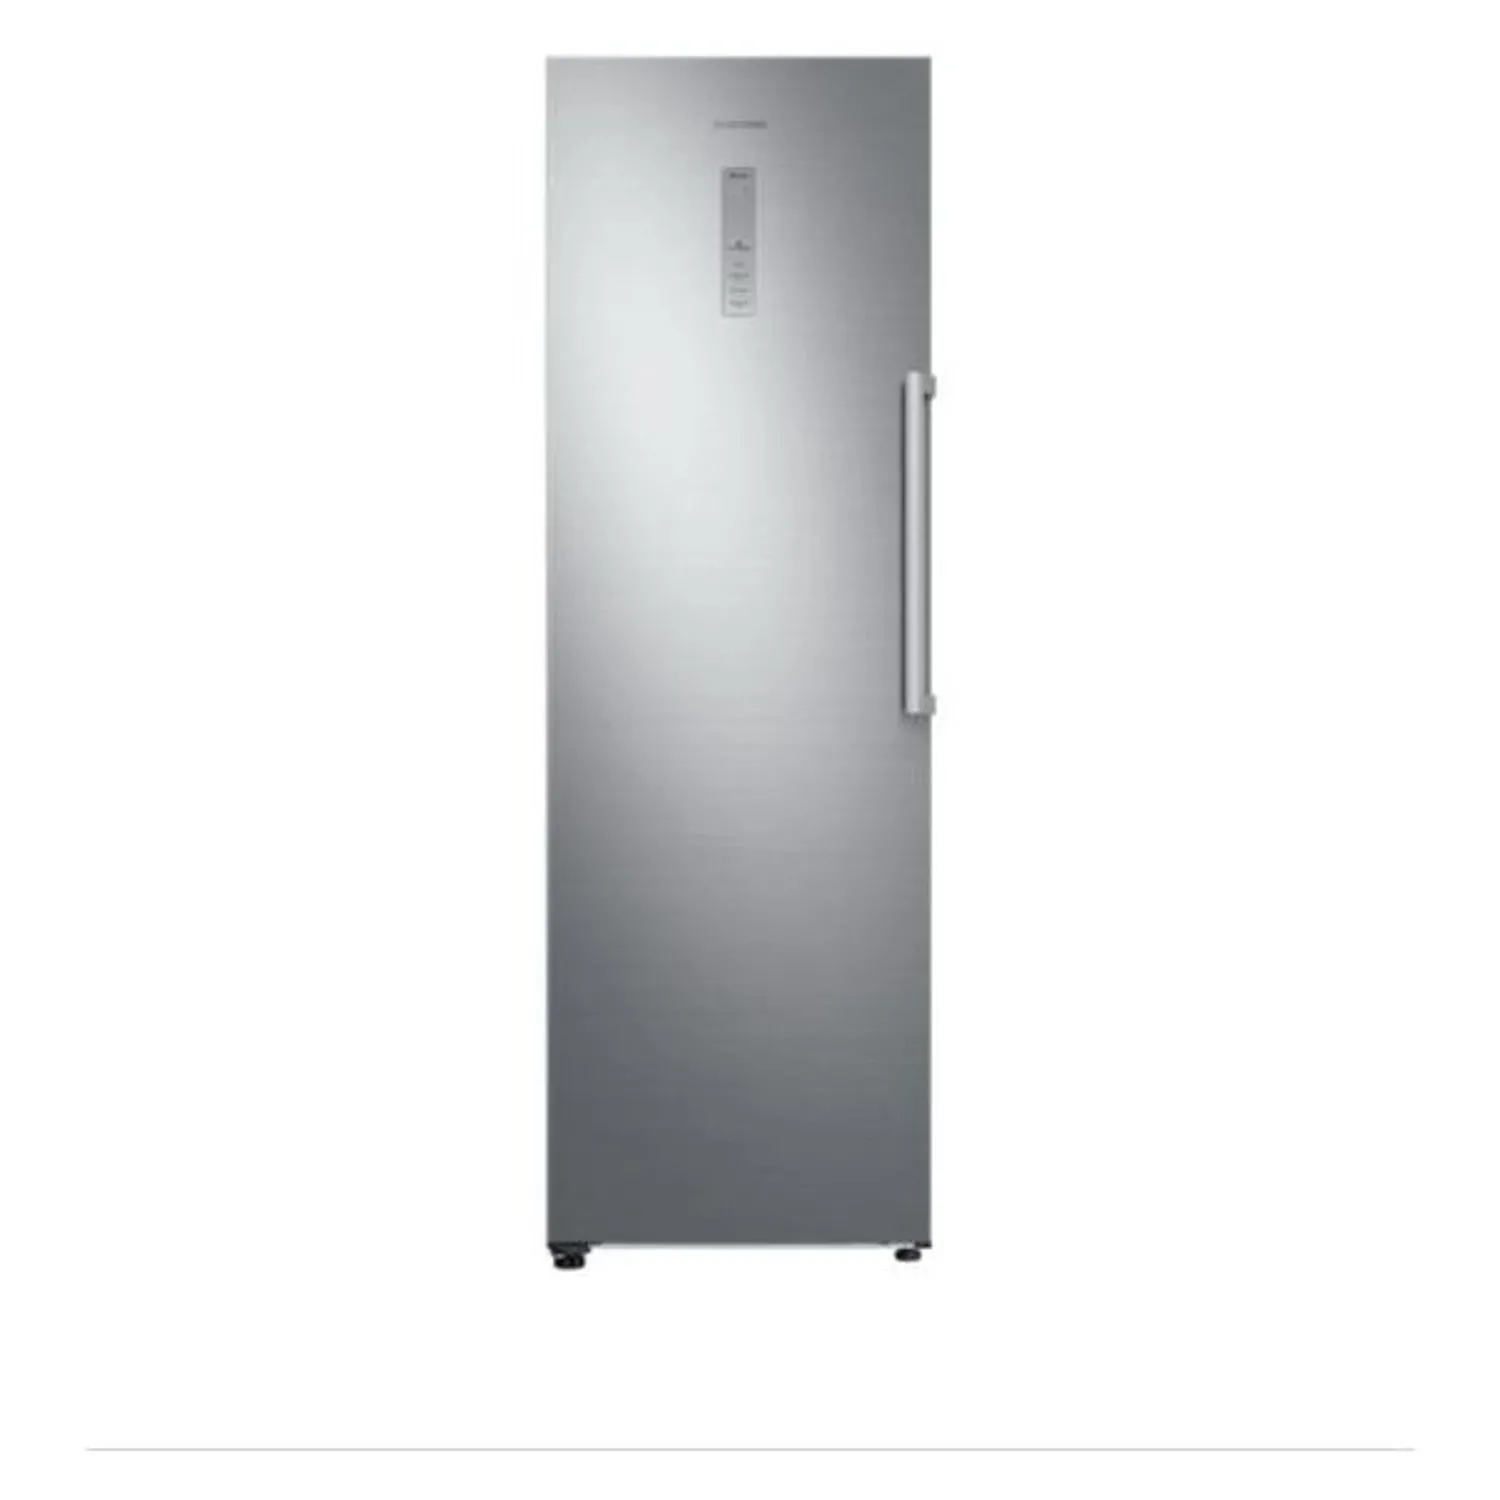 Samsung 315 Liter Upright Freezer Single Door No Frost Color Inox Model – RZ32M71207F/SG – 1 Year Full 10 Years Compressor Warranty.